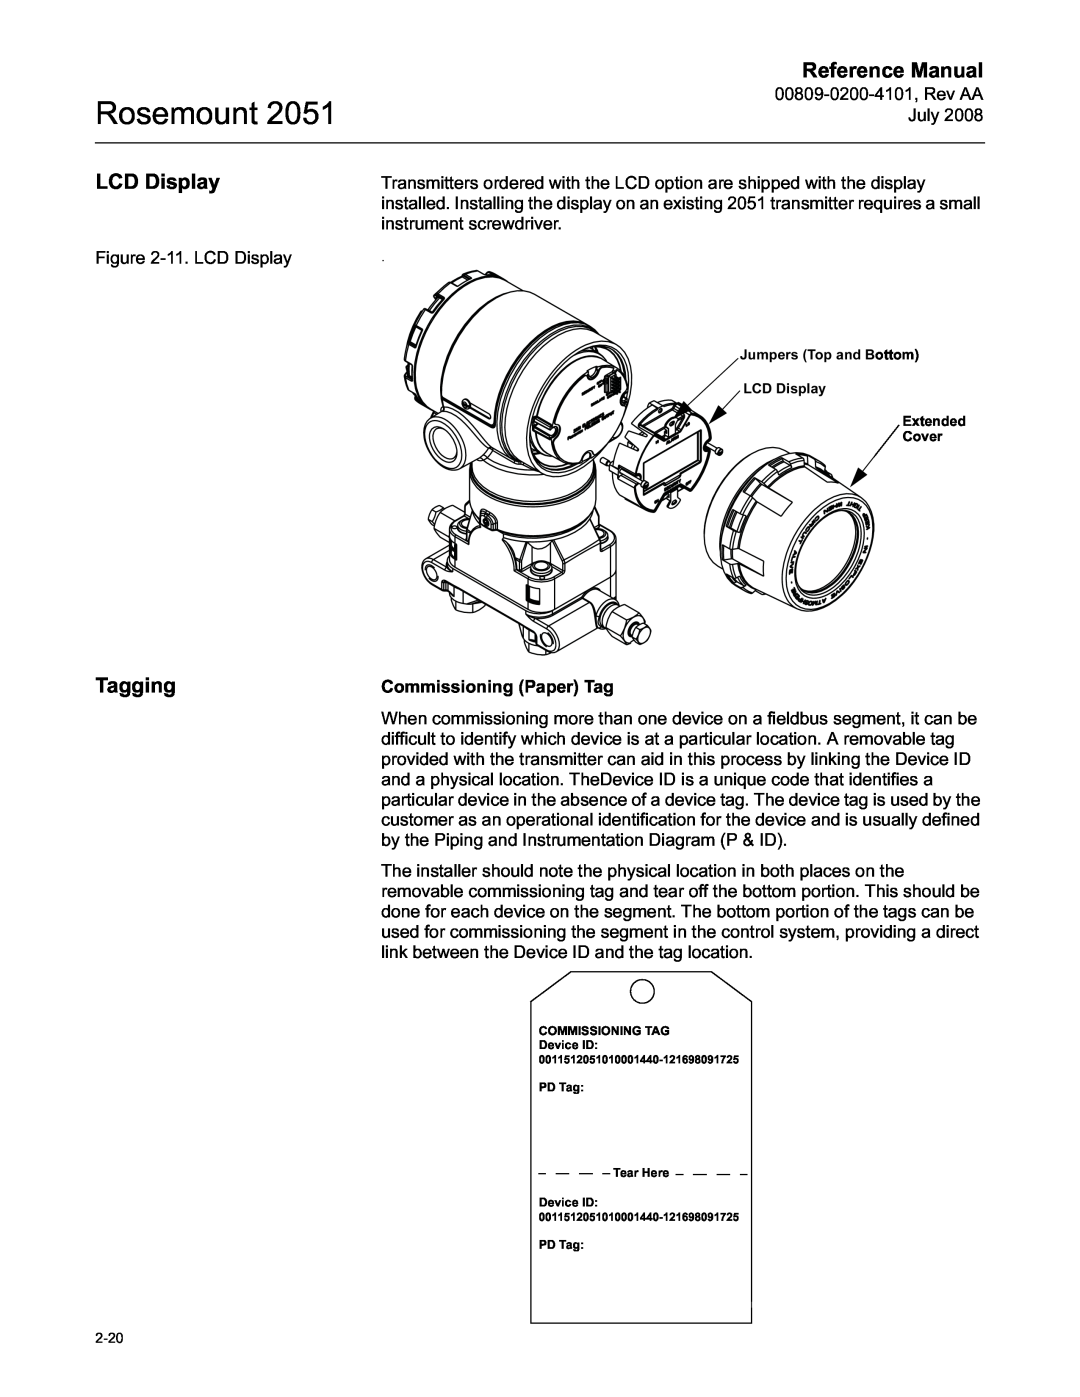 Emerson Process Management 2051 manual LCD Display, Tagging, Rosemount, Reference Manual 